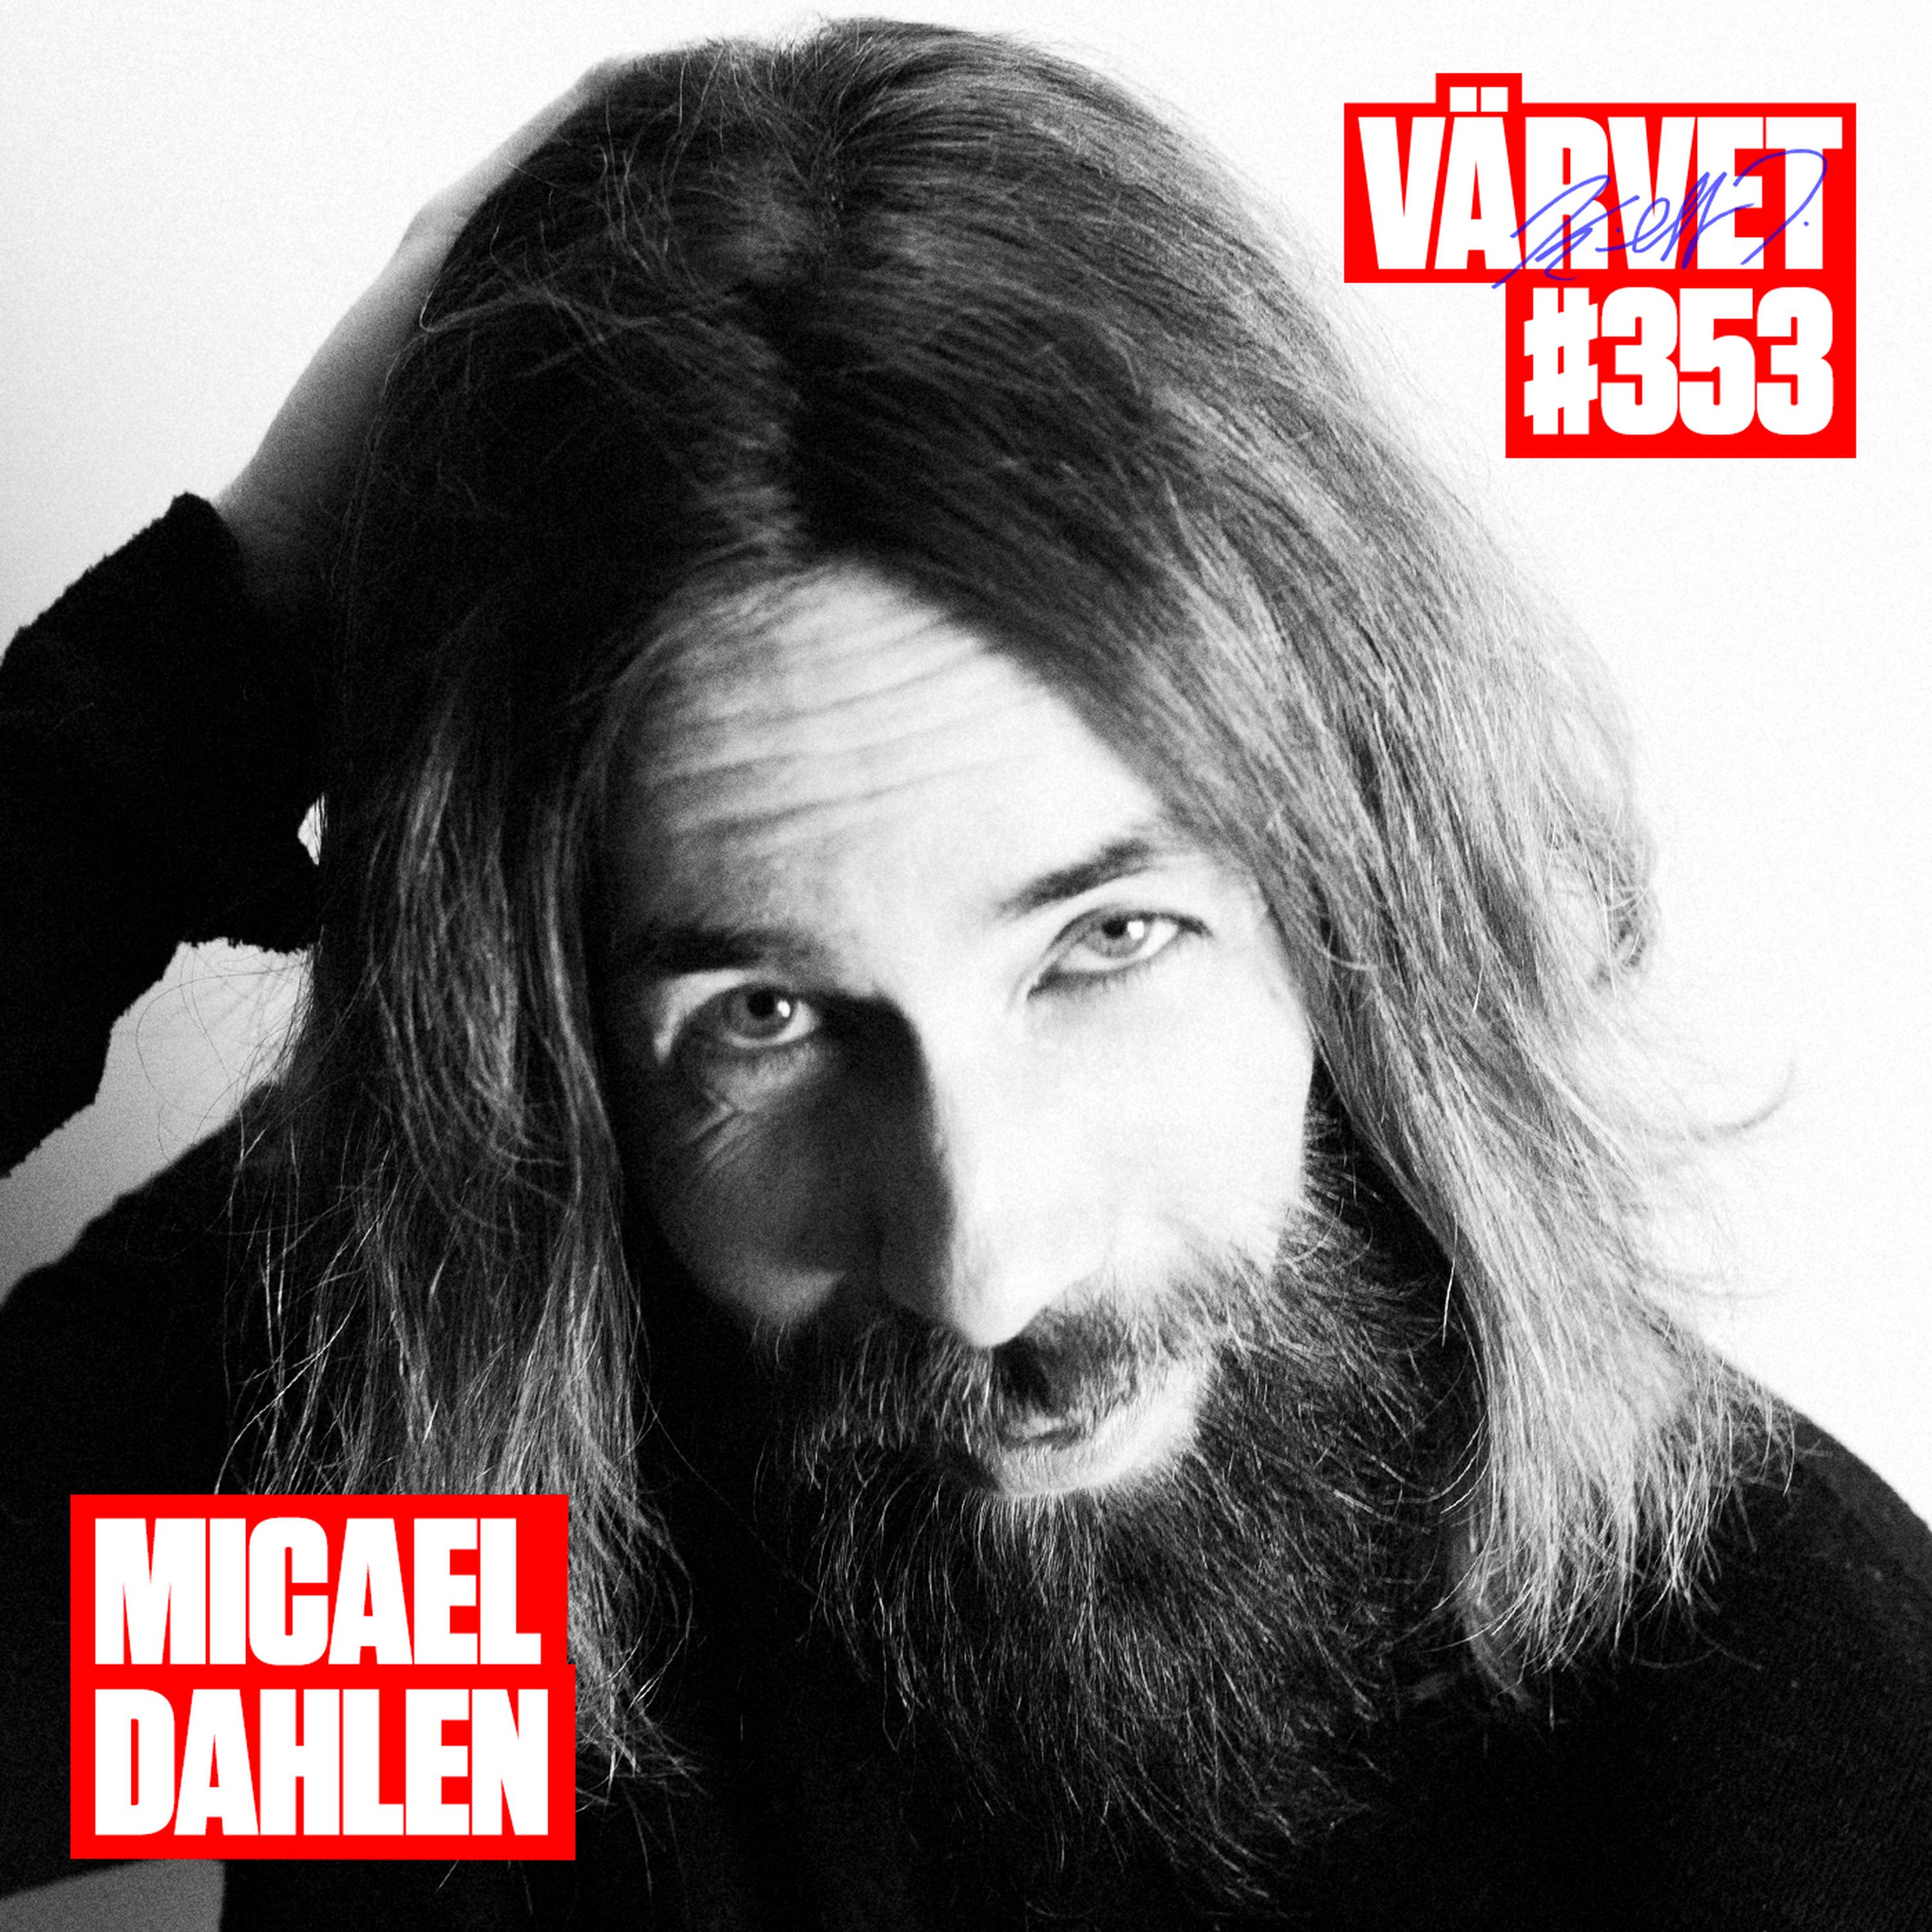 #353: Micael Dahlen